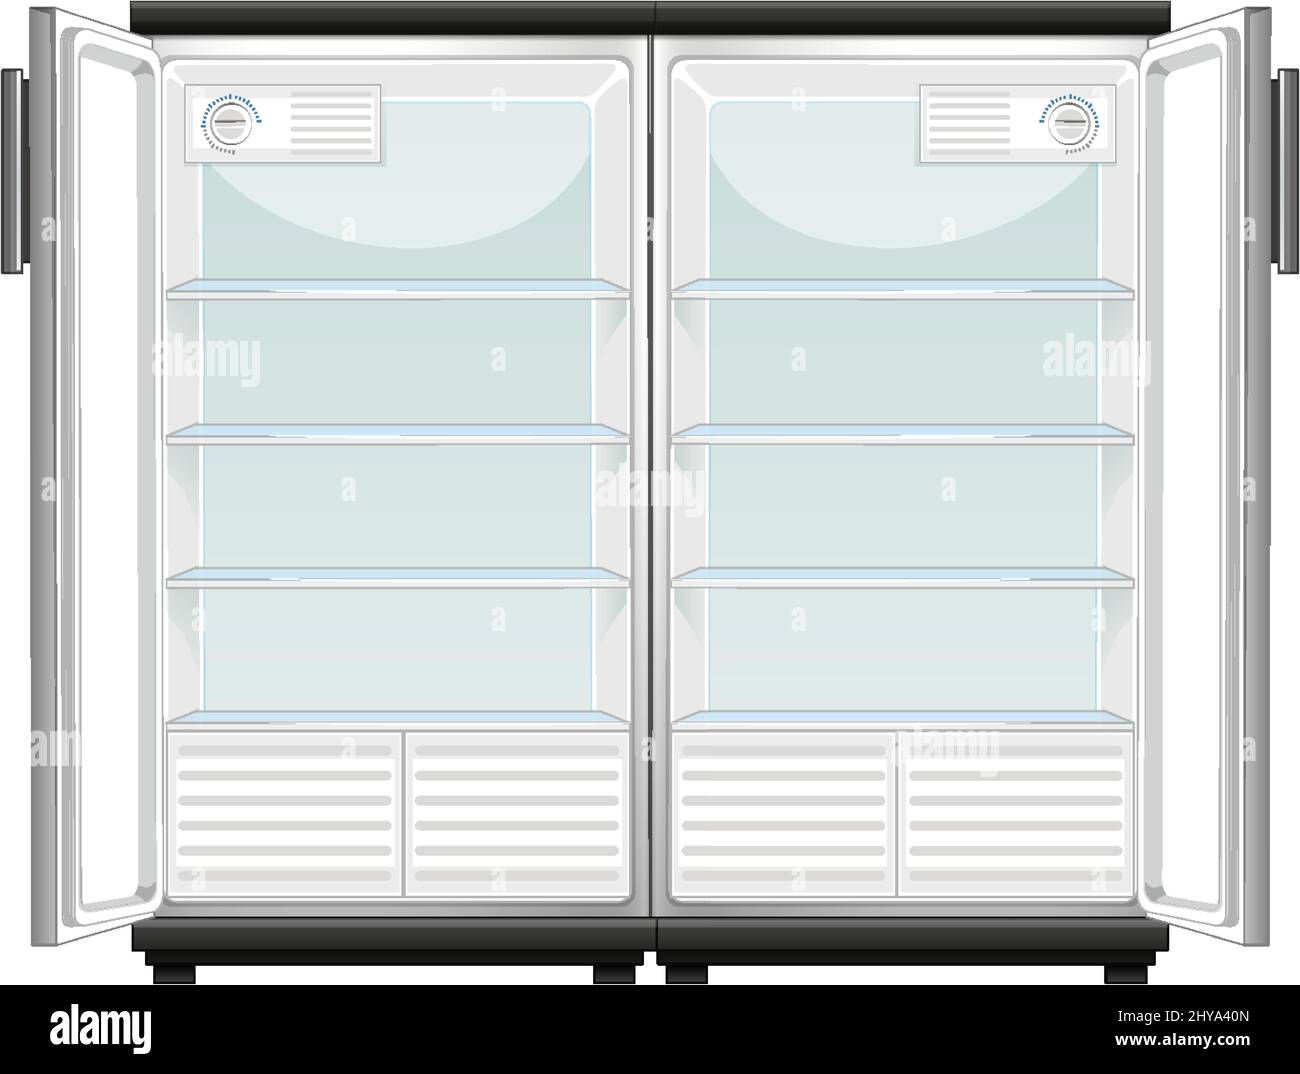 Refrigerator with opened door illustration Stock Vector